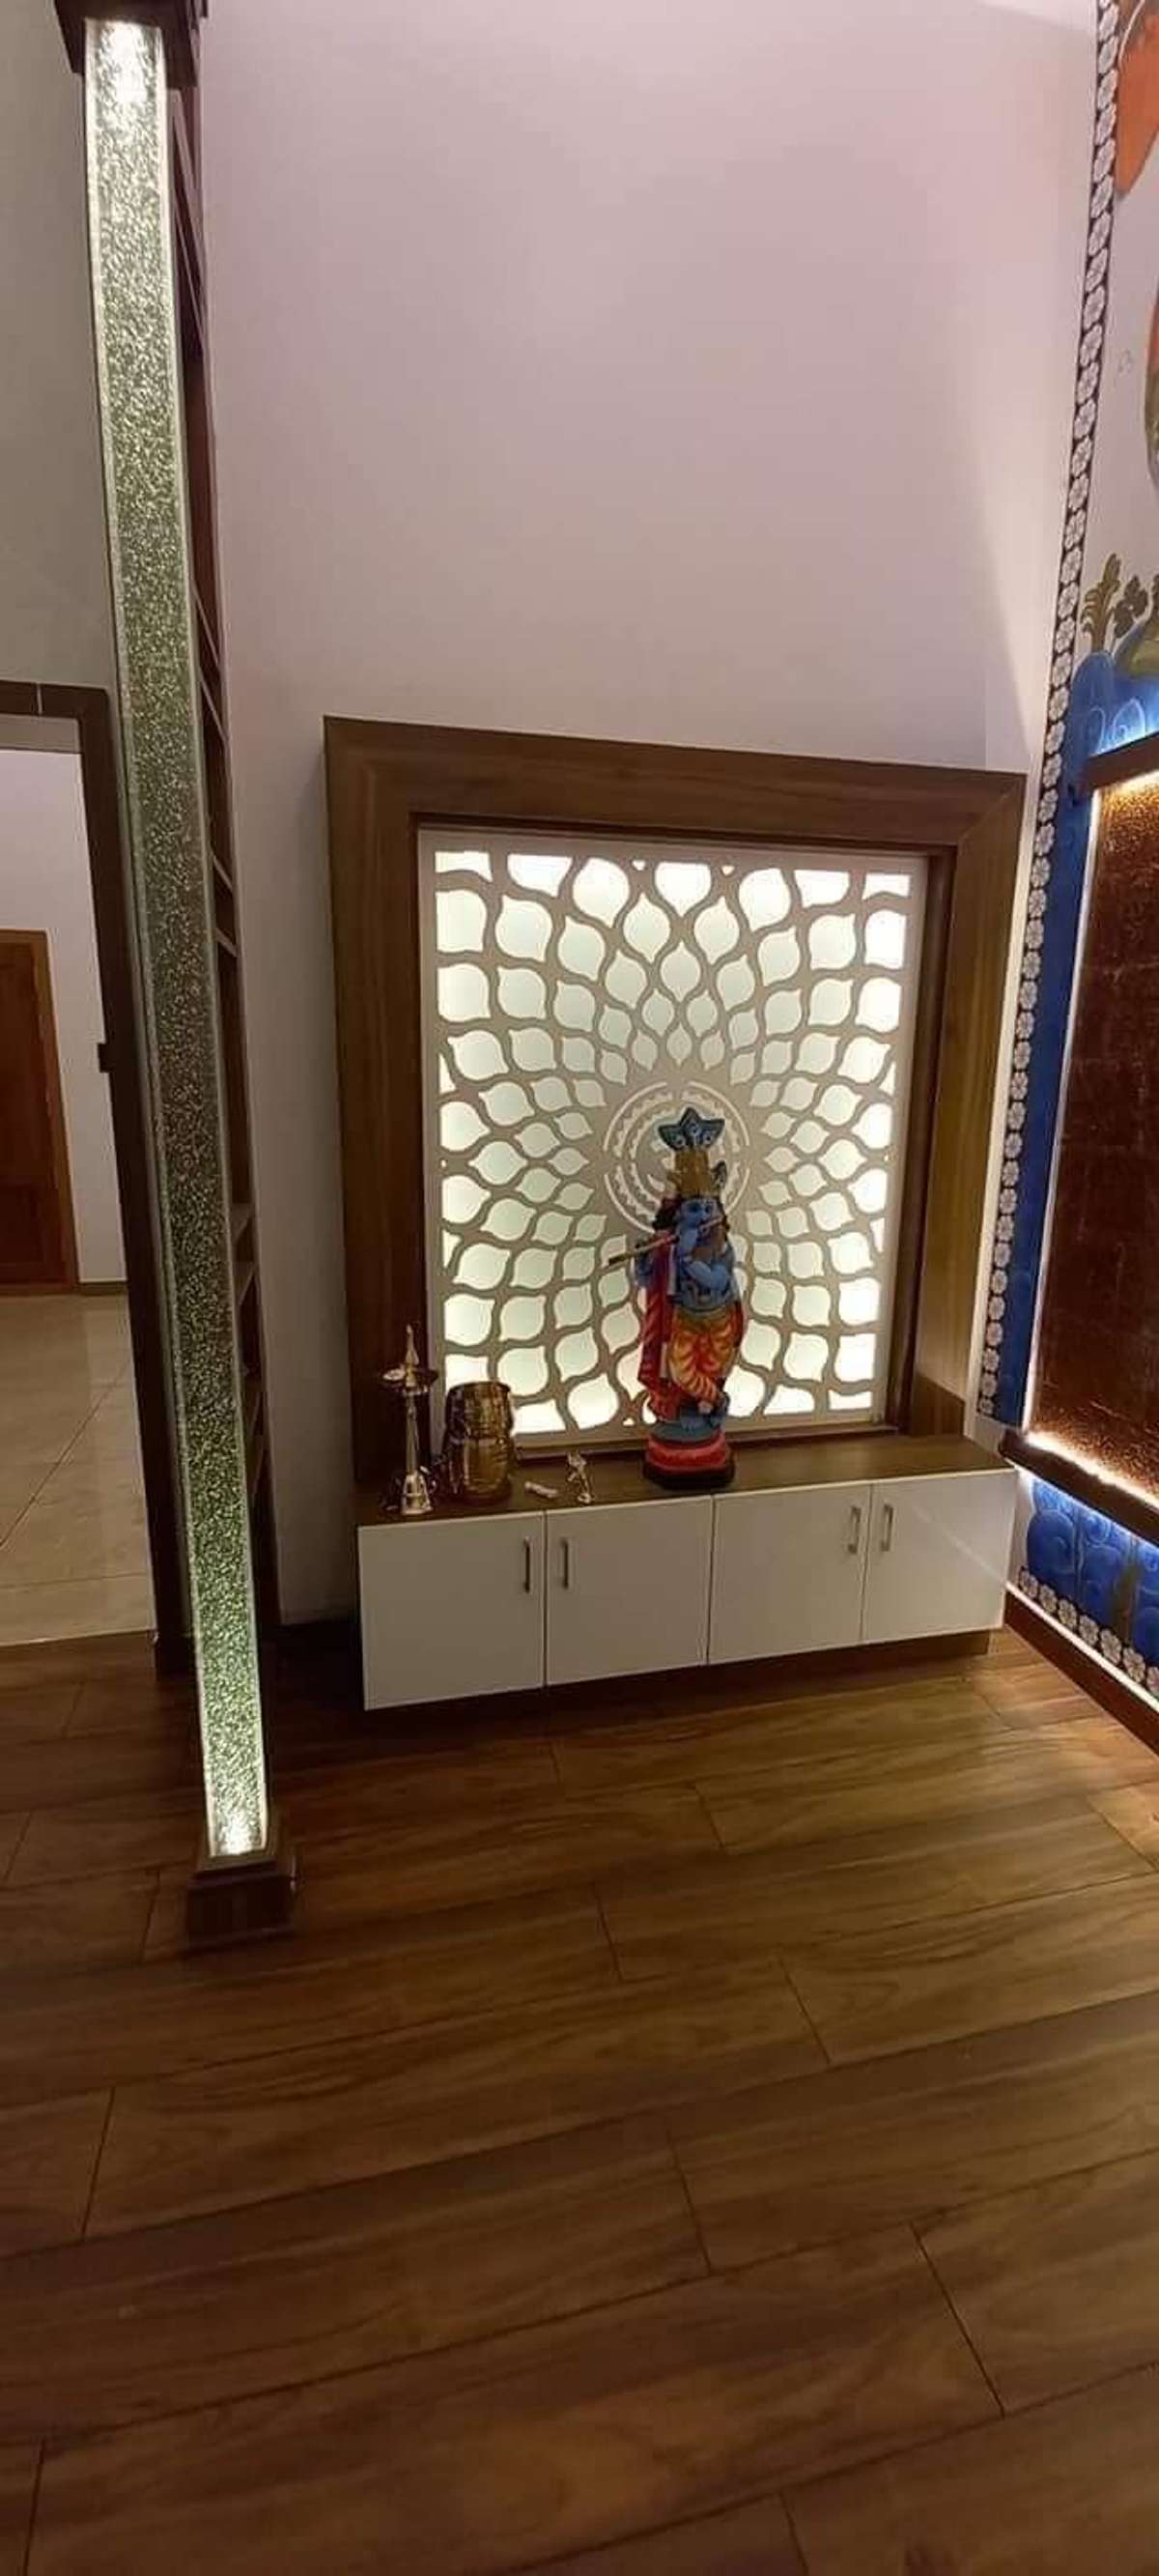 Storage, Prayer Room Designs by Carpenter ЁЯЩП рдлреЙрд▓реЛ рдХрд░реЛ рджрд┐рд▓реНрд▓реА рдХрд╛рд░рдкреЗрдВрдЯрд░ рдХреЛ, Delhi | Kolo